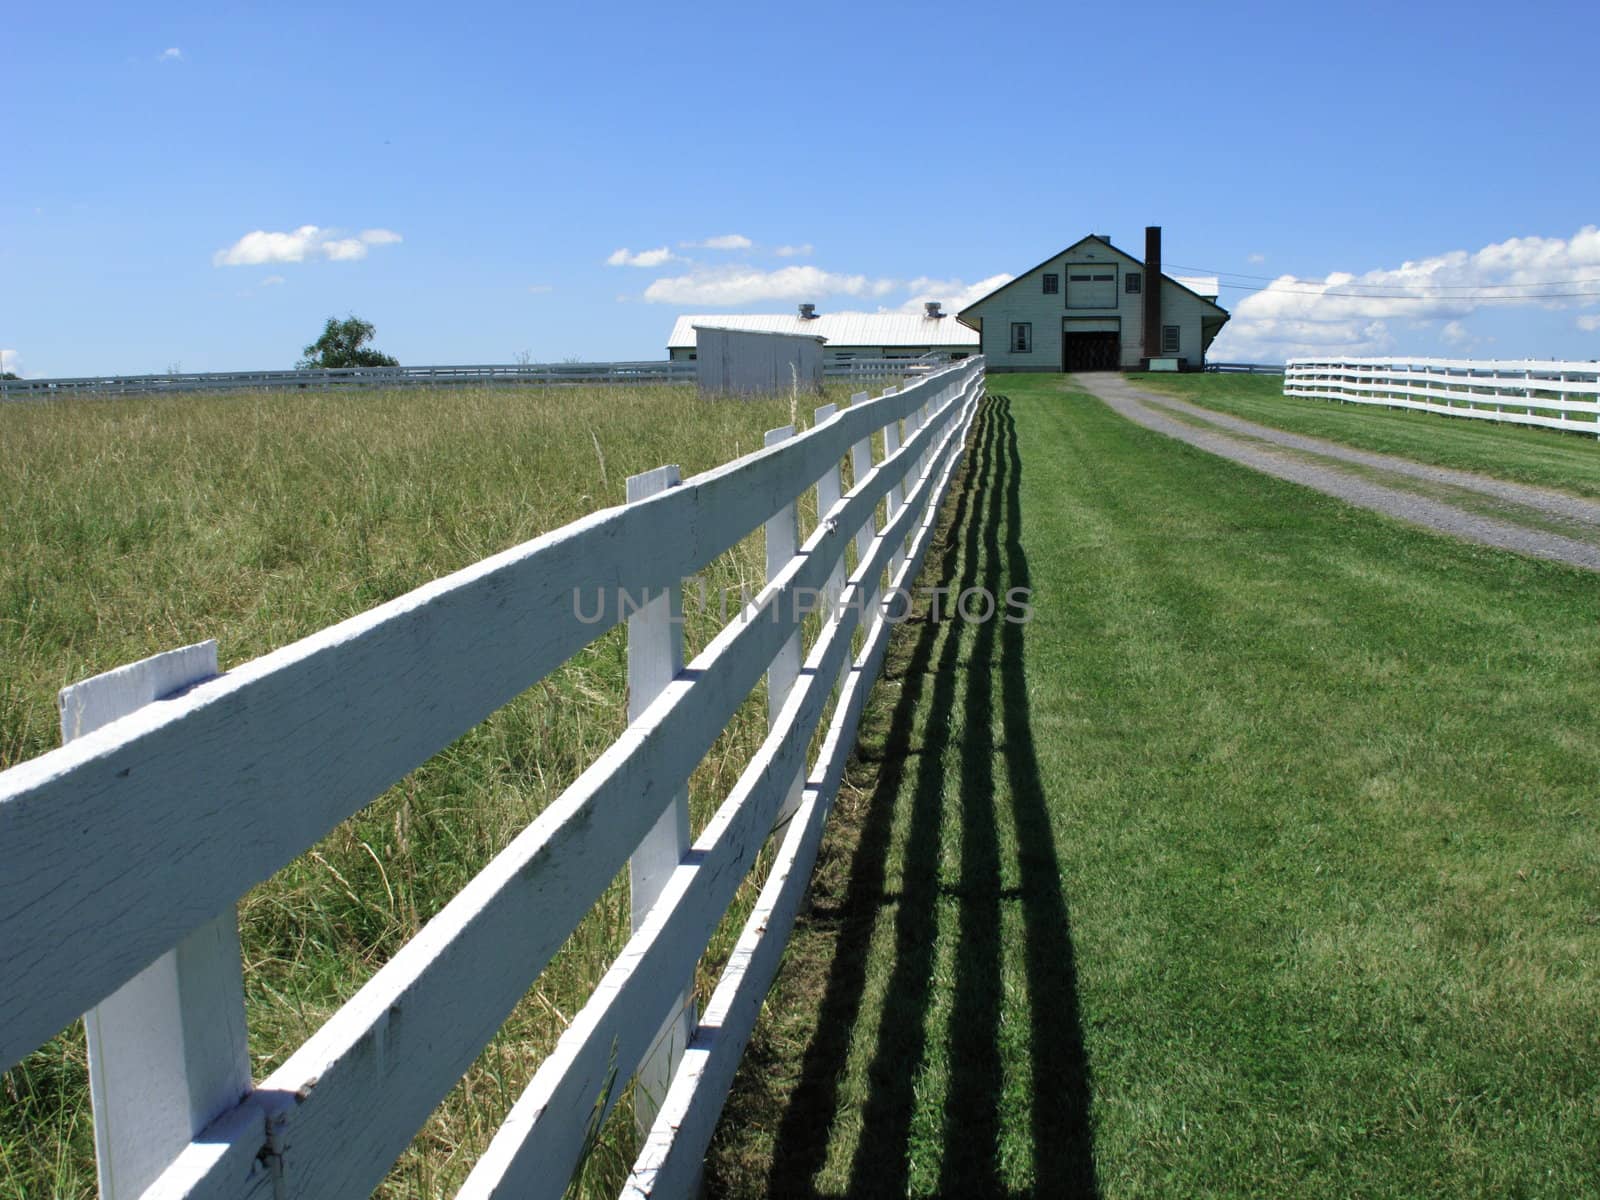 Perfect summer day at Eisenhower Farm, Gettysburg